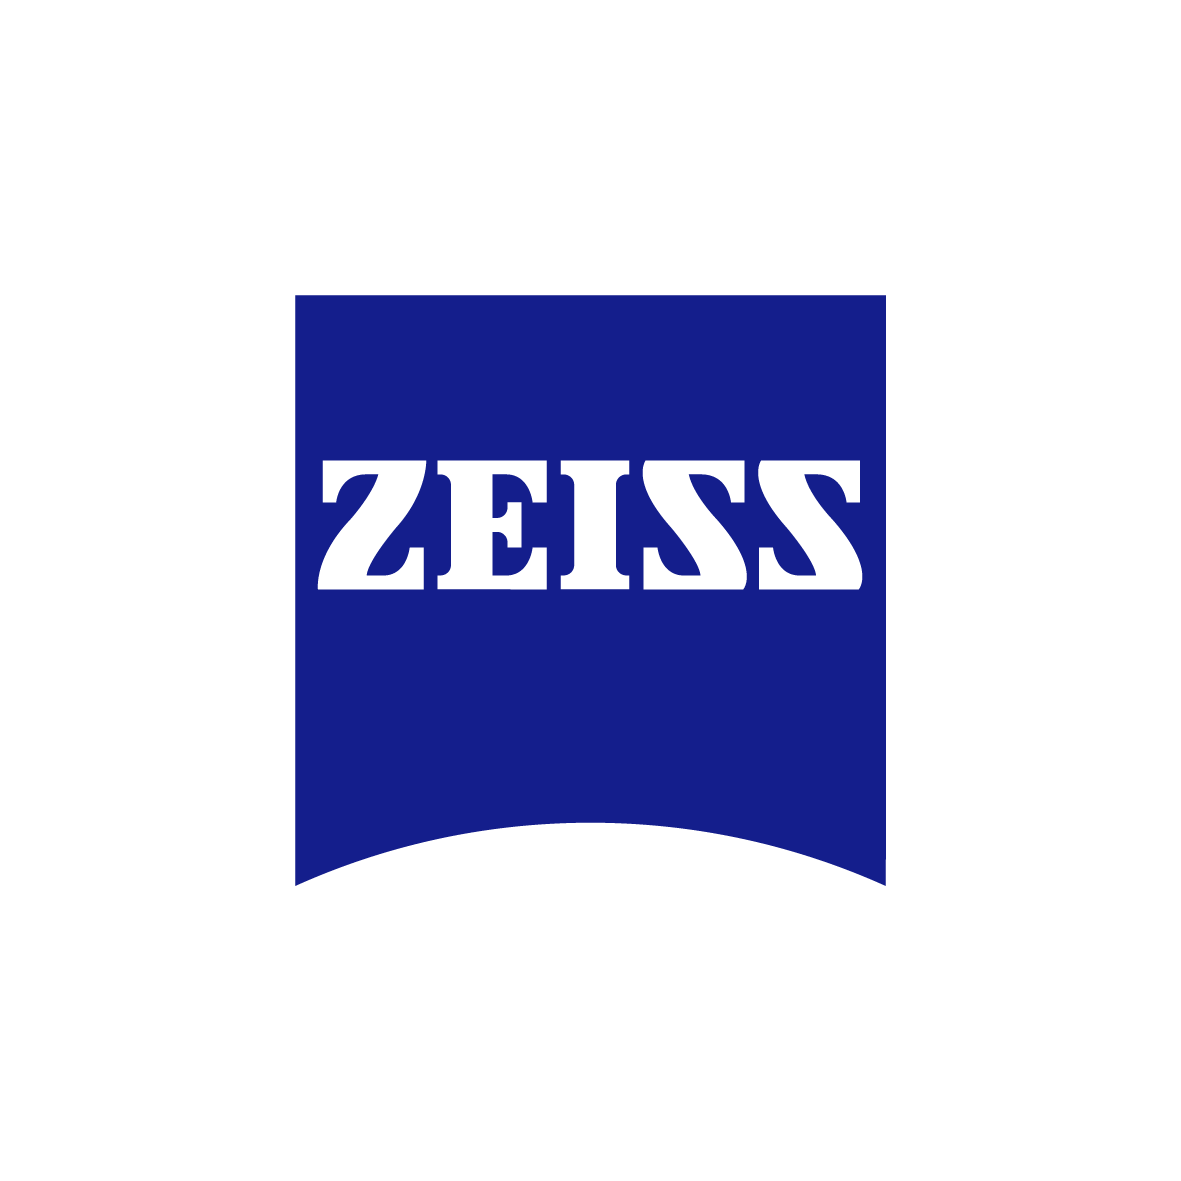 Premier Sponsor: Zeiss logo